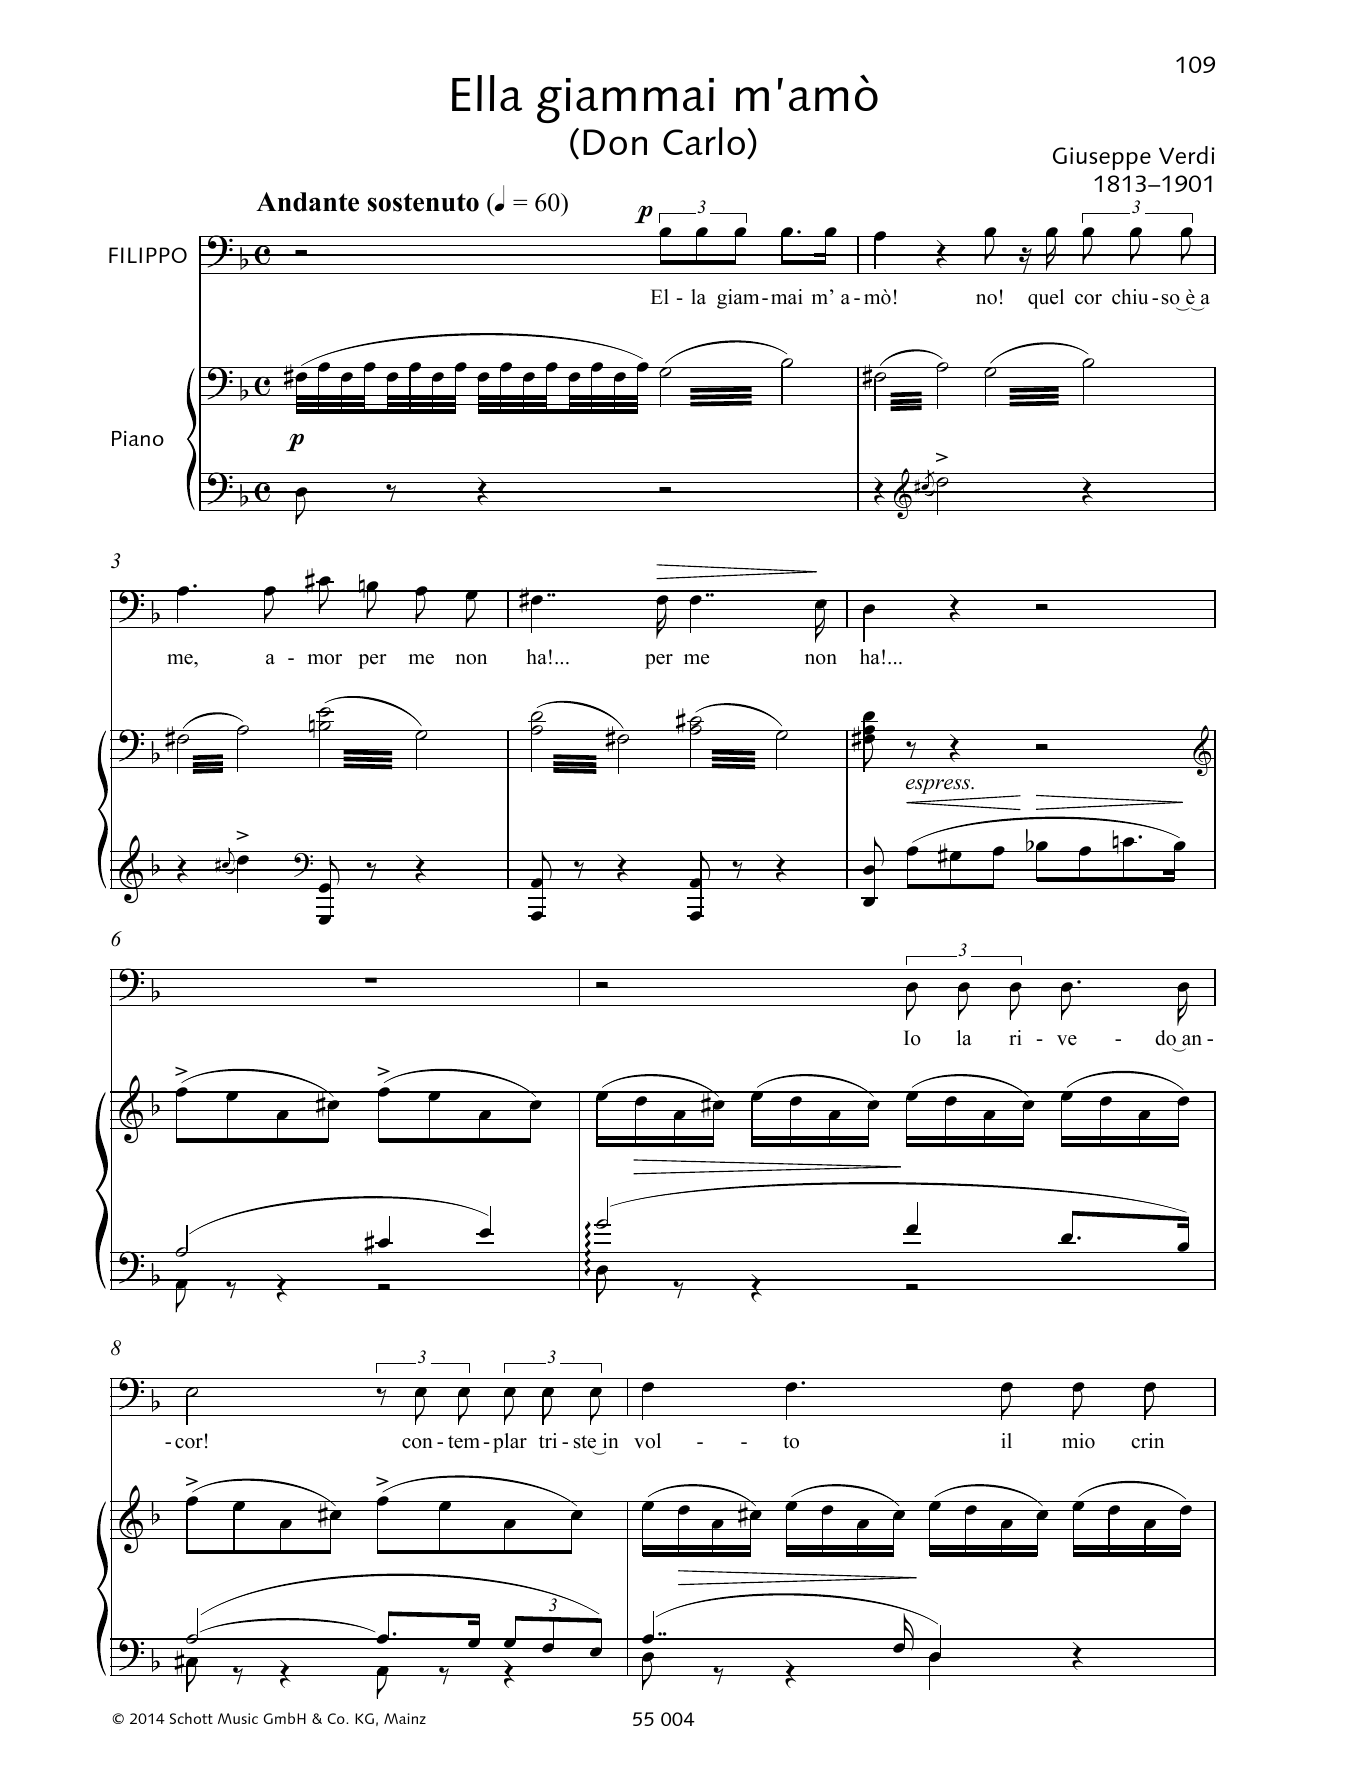 Giuseppe Verdi Ella giammai m'amò Sheet Music Notes & Chords for Piano & Vocal - Download or Print PDF